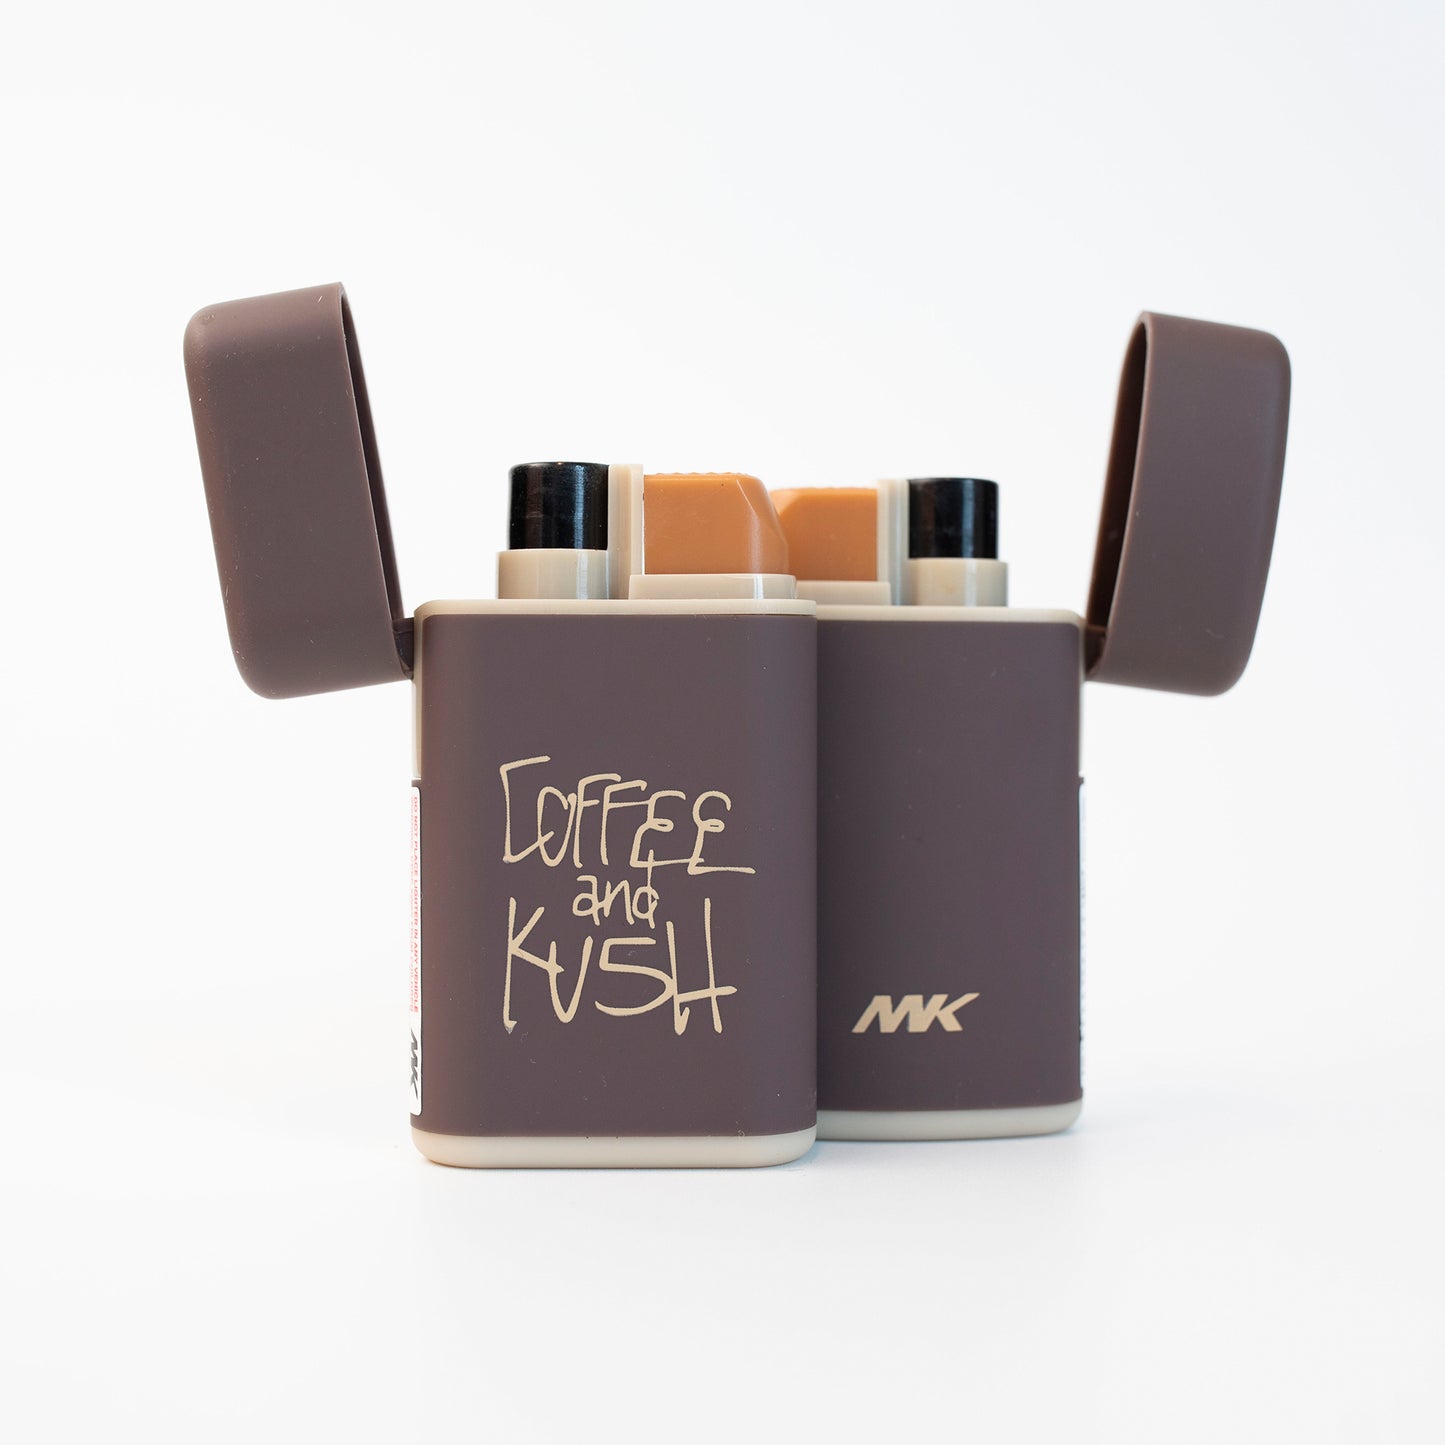 MK Lighter x Coffee & Kush (2pcs)